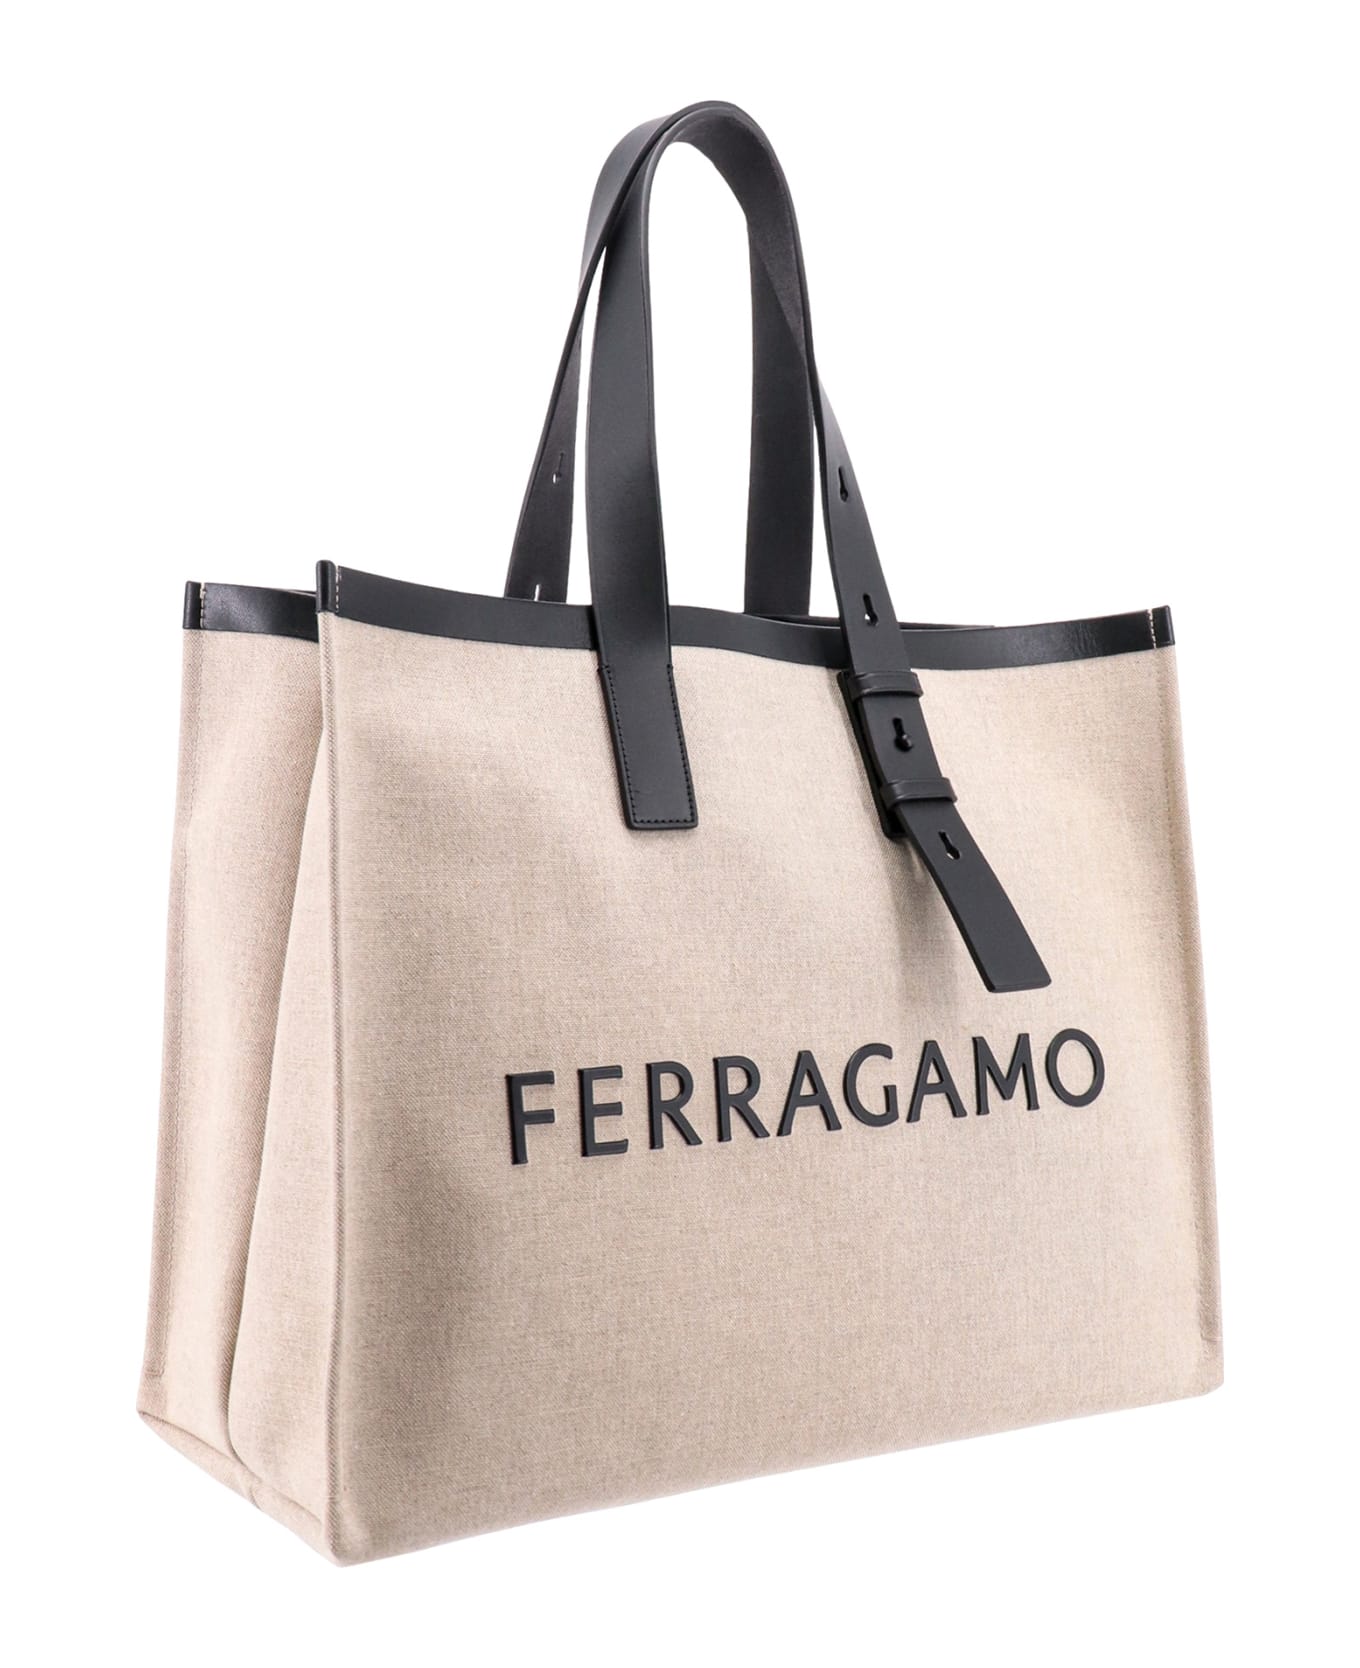 Ferragamo Handbag - Beige